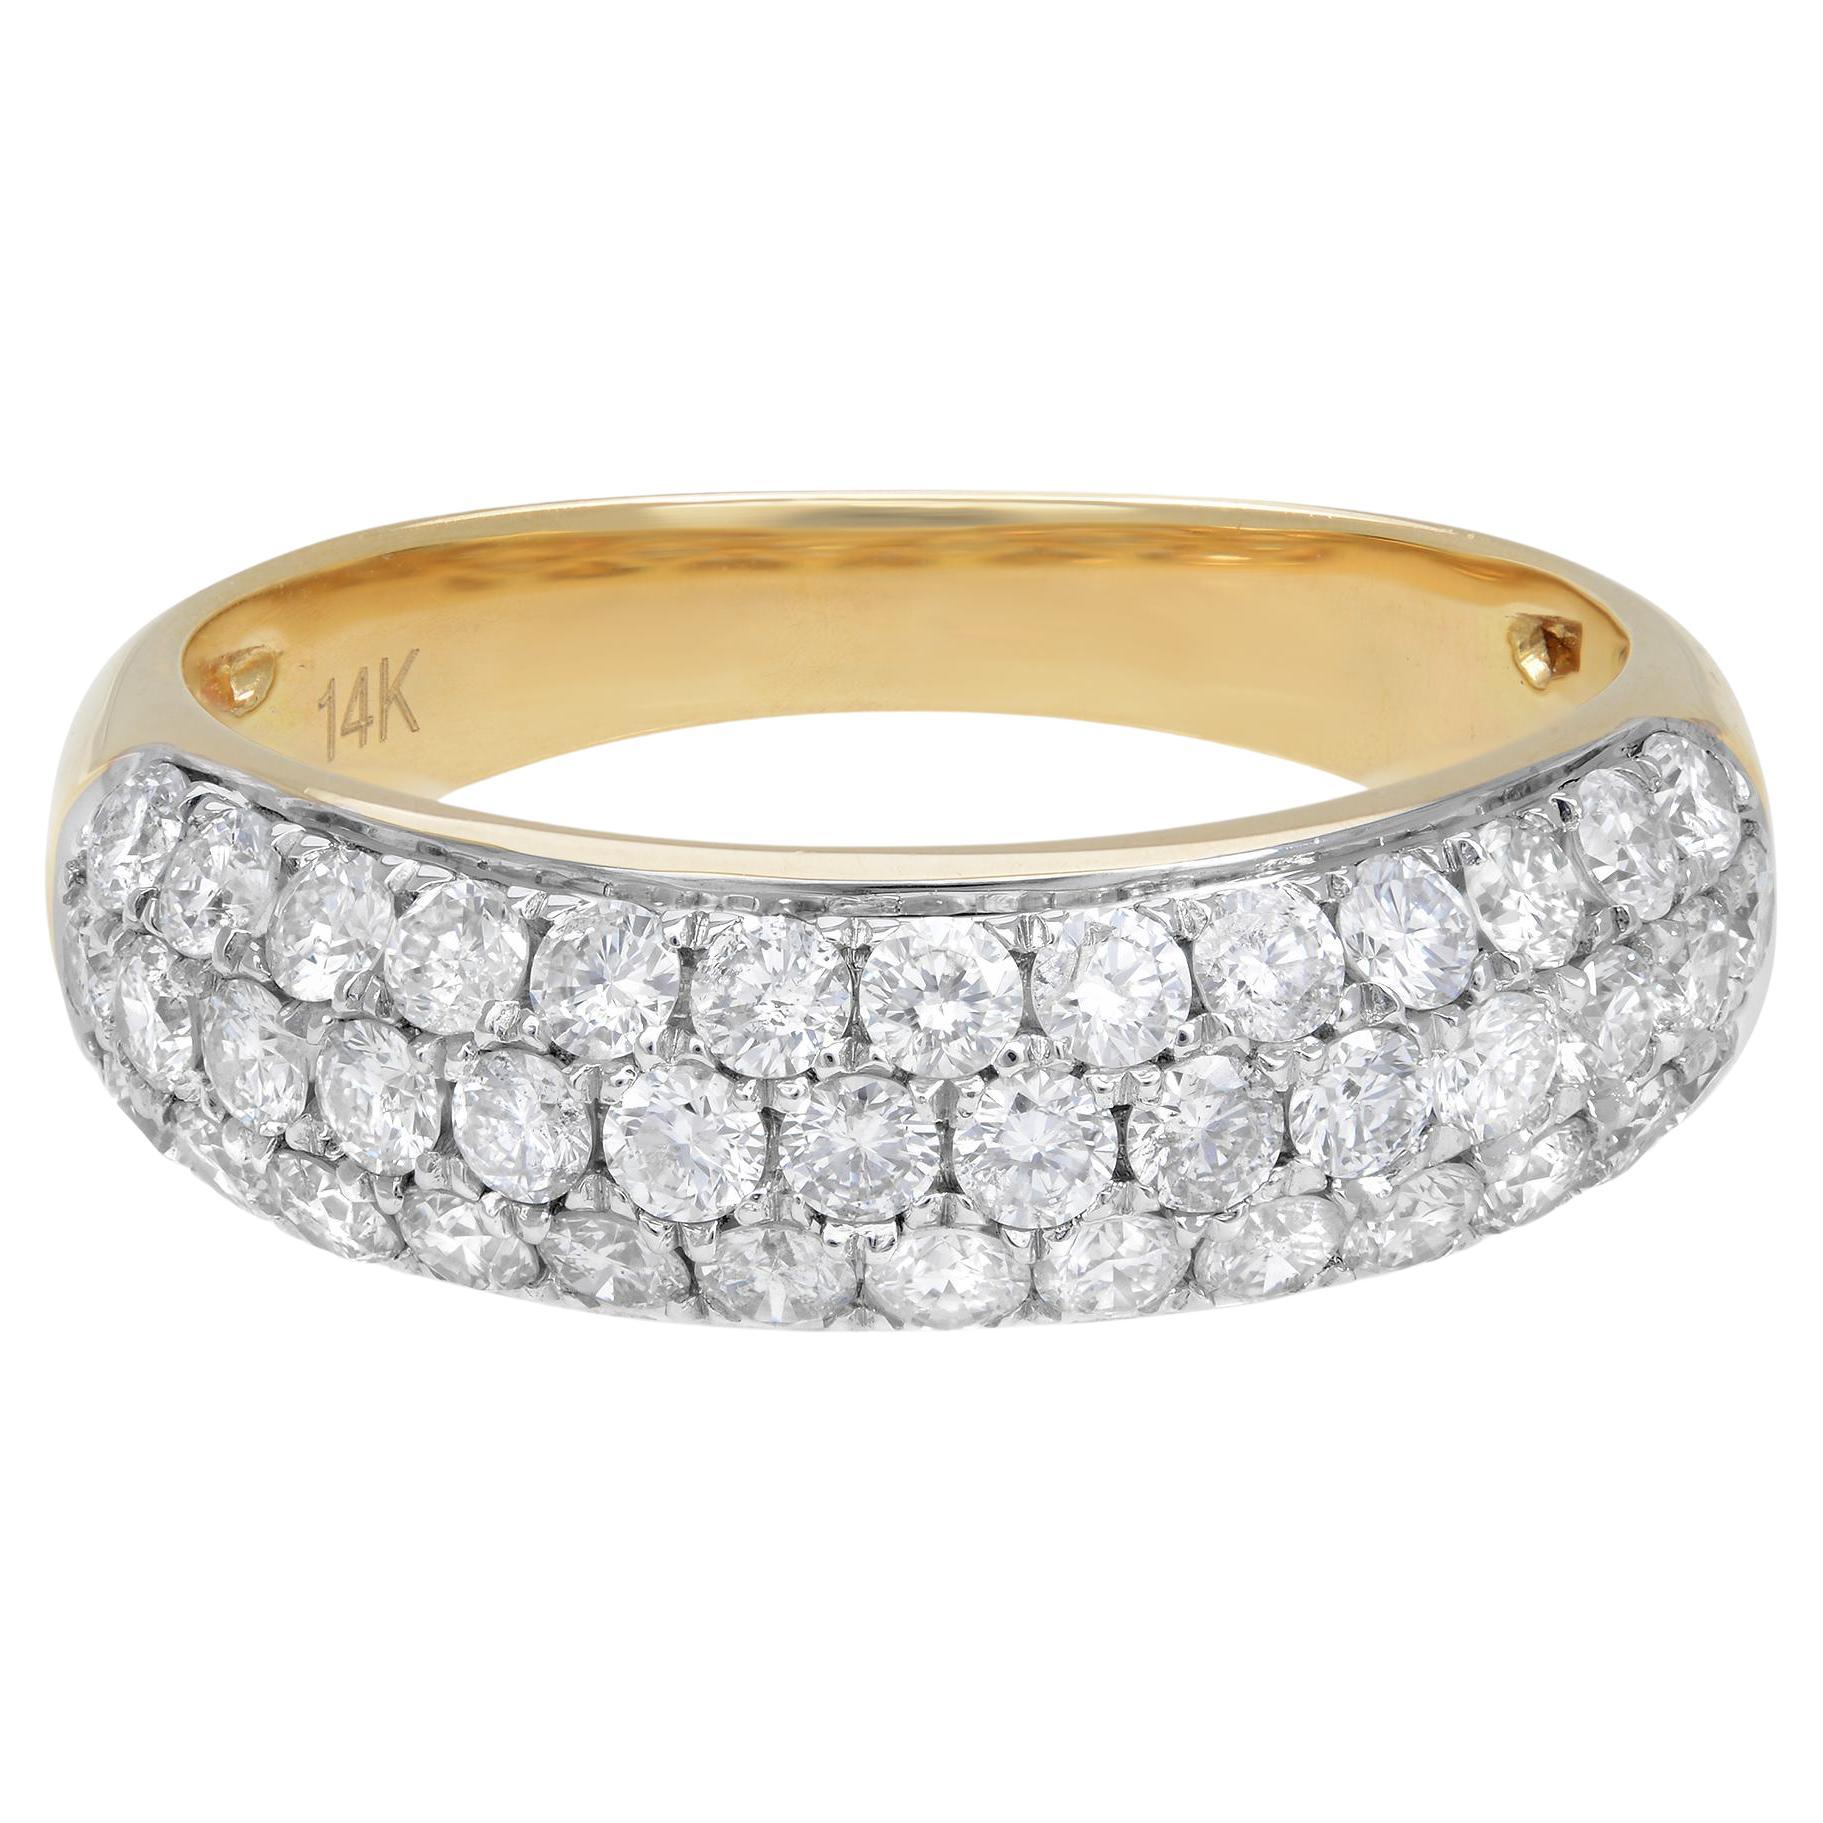 Rachel Koen Three Row Pave Diamond Wedding Band Ring 14K Yellow Gold 1.04cttw For Sale